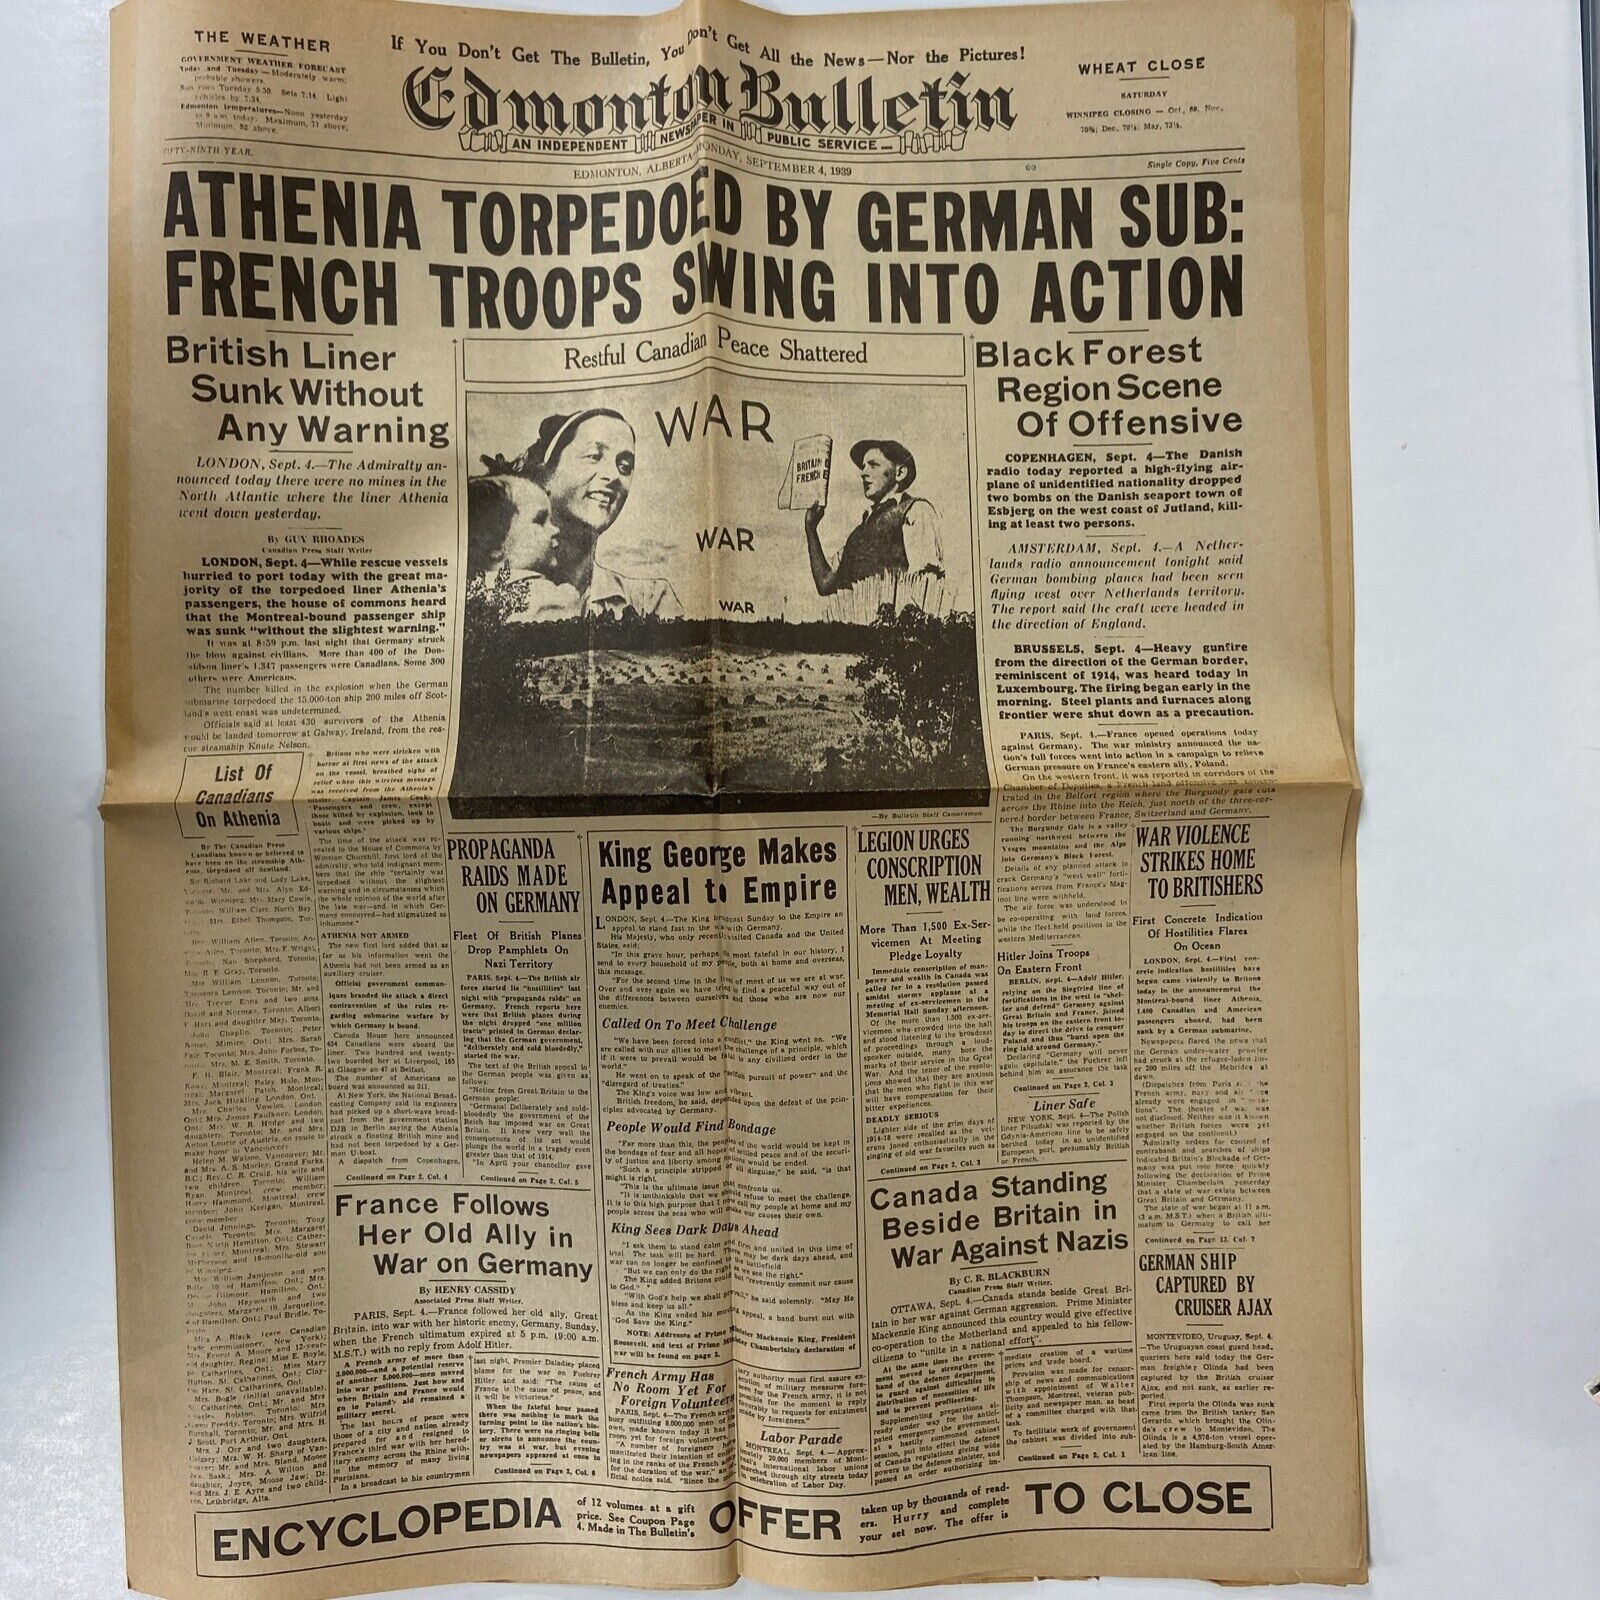 Edmonton Bulletin Newspaper Alberta Canada September 4, 1939 World War Declared